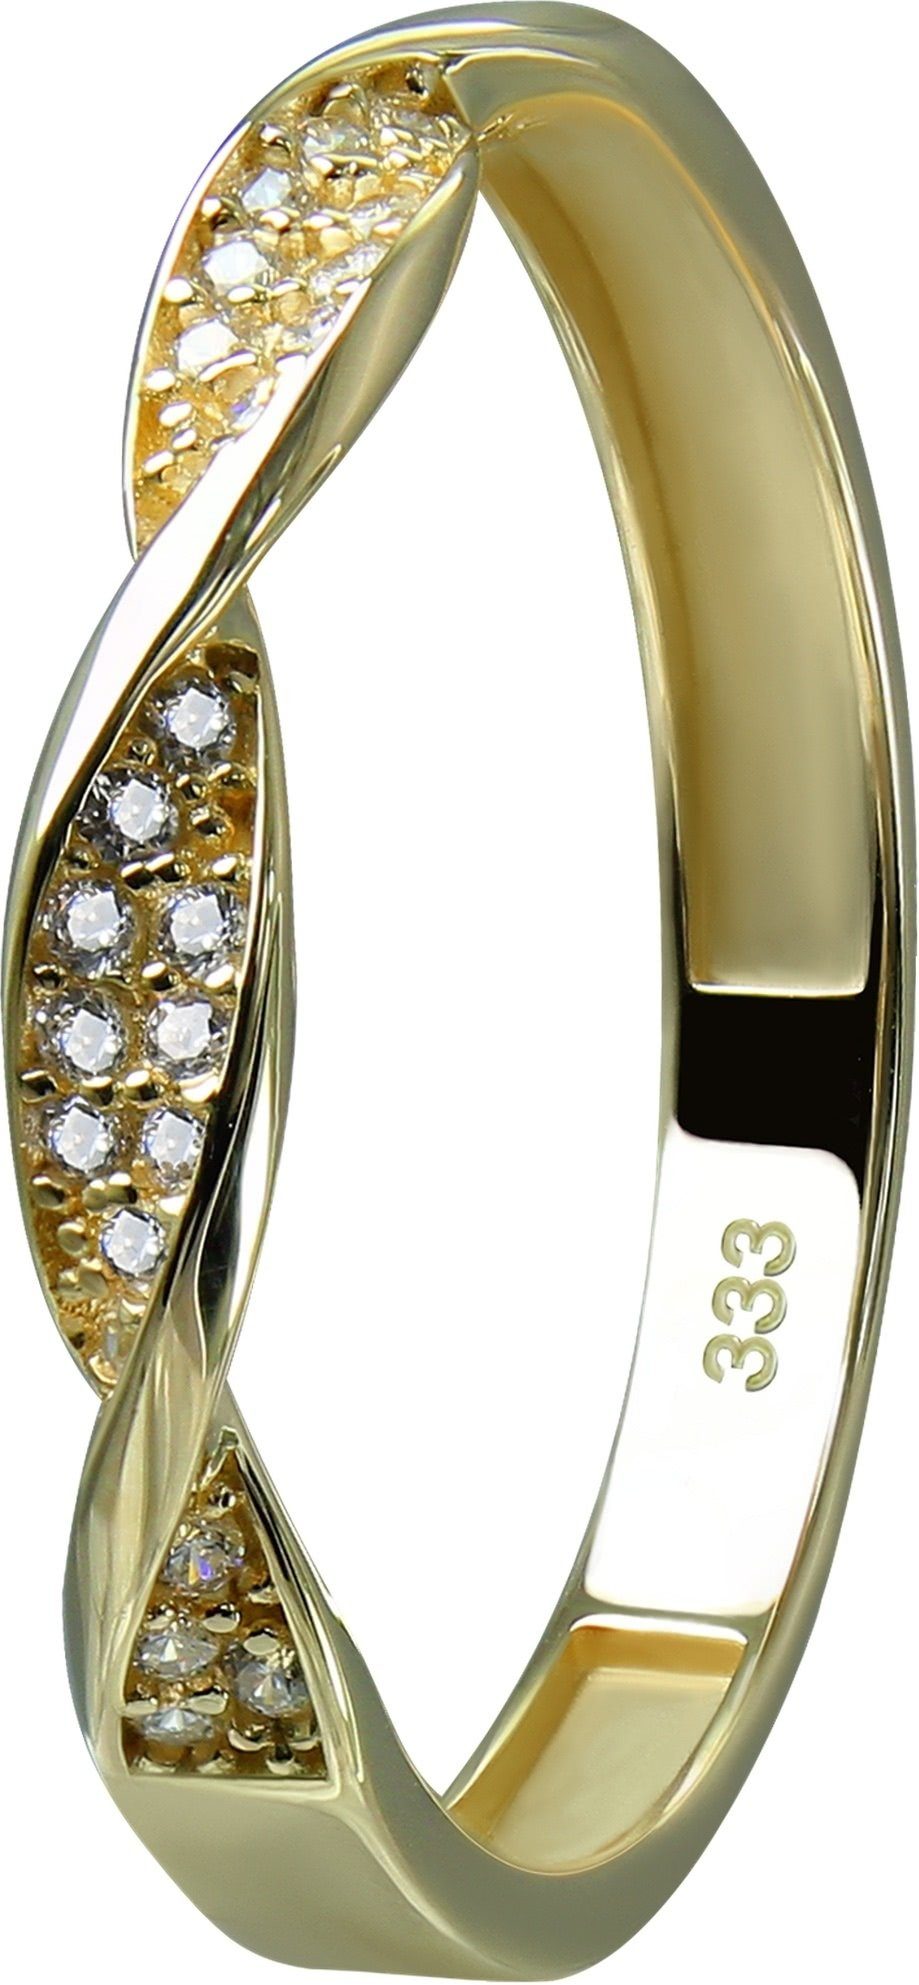 GoldDream Goldring GoldDream Gold Ring Twisted Gr.60 (Fingerring), Damen  Ring Twisted 333 Gelbgold - 8 Karat, Farbe: gold, weiß